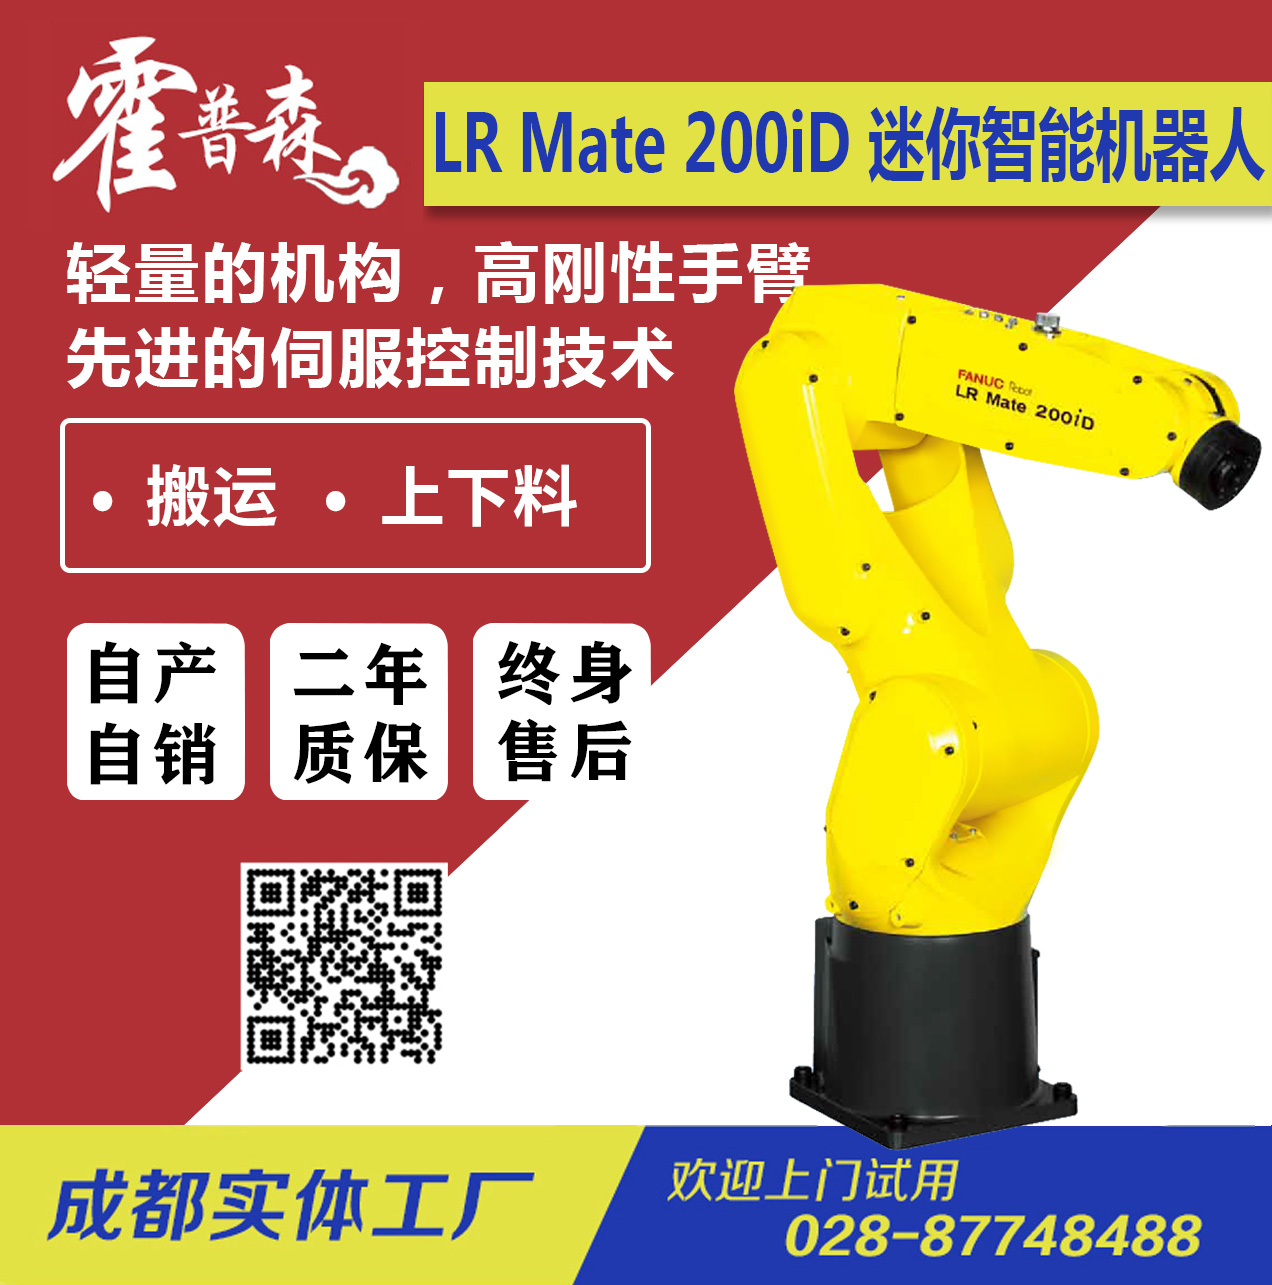 FANUC-Robot LR Mate200iD搬运/上下料/万能迷你智能机器人